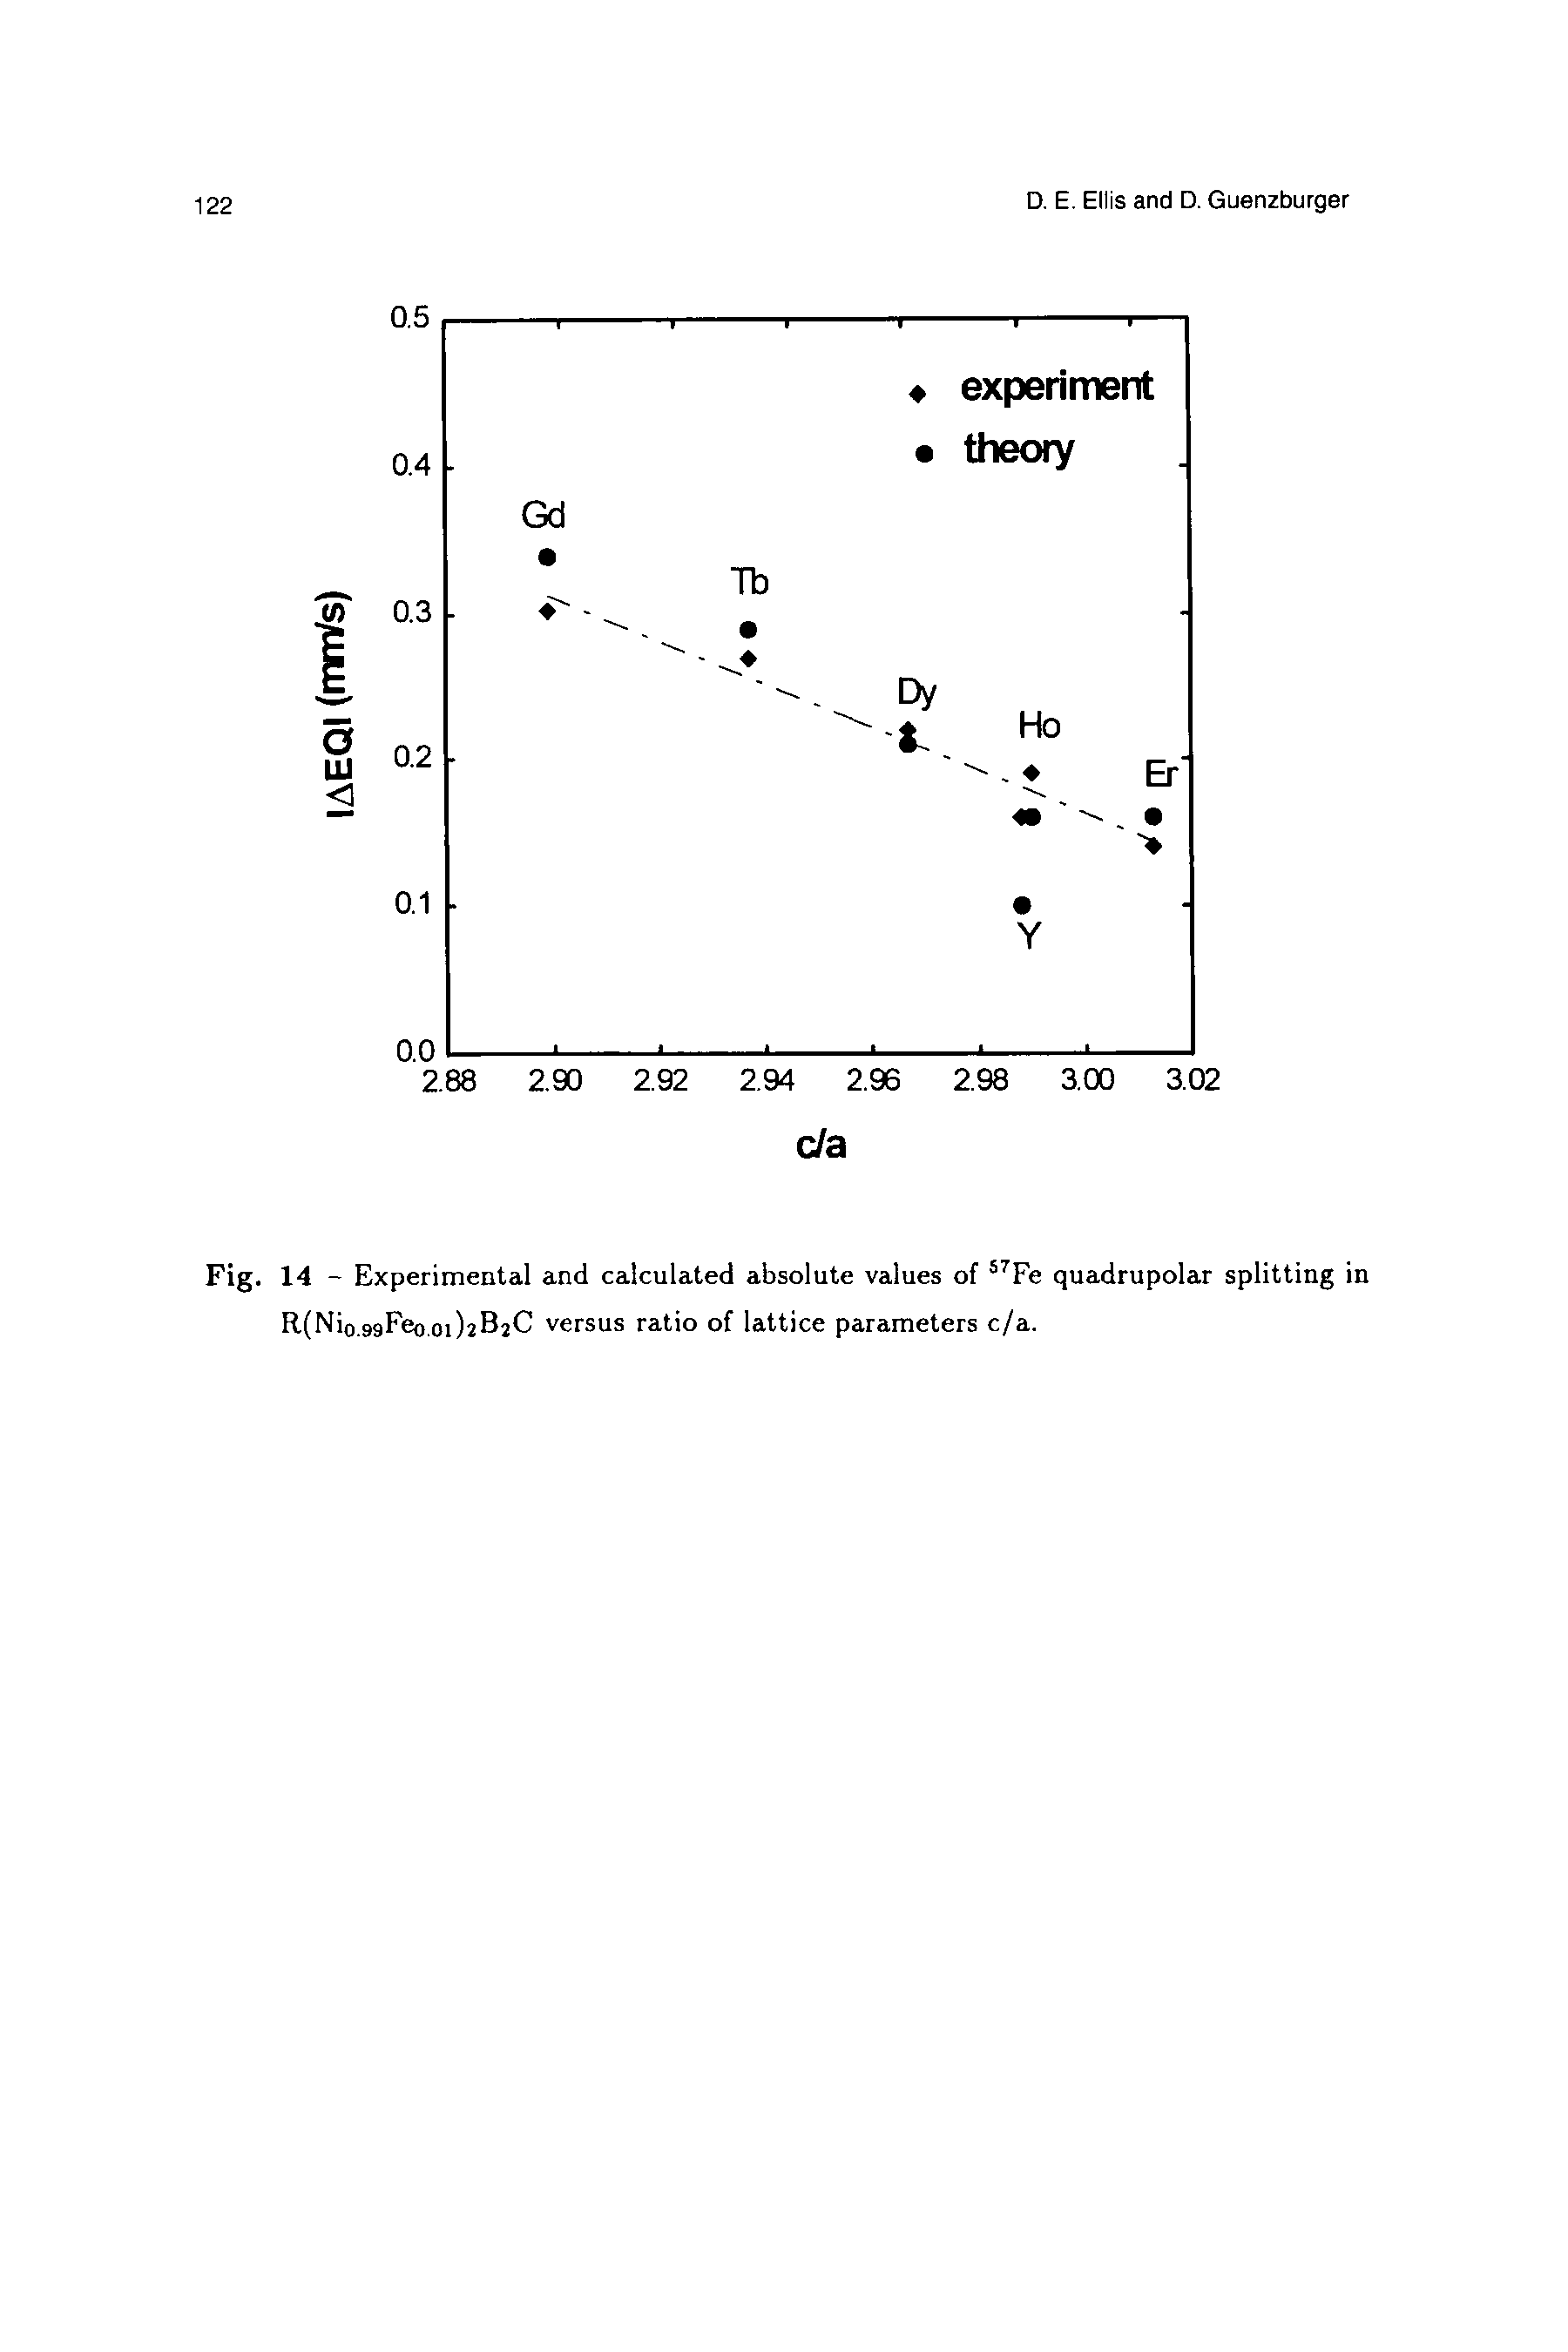 Fig. 14 - Experimental and calculated absolute values of S7Fe quadrupolar splitting in R(Nio.99Feo.oi)2B2C versus ratio of lattice parameters c/a.